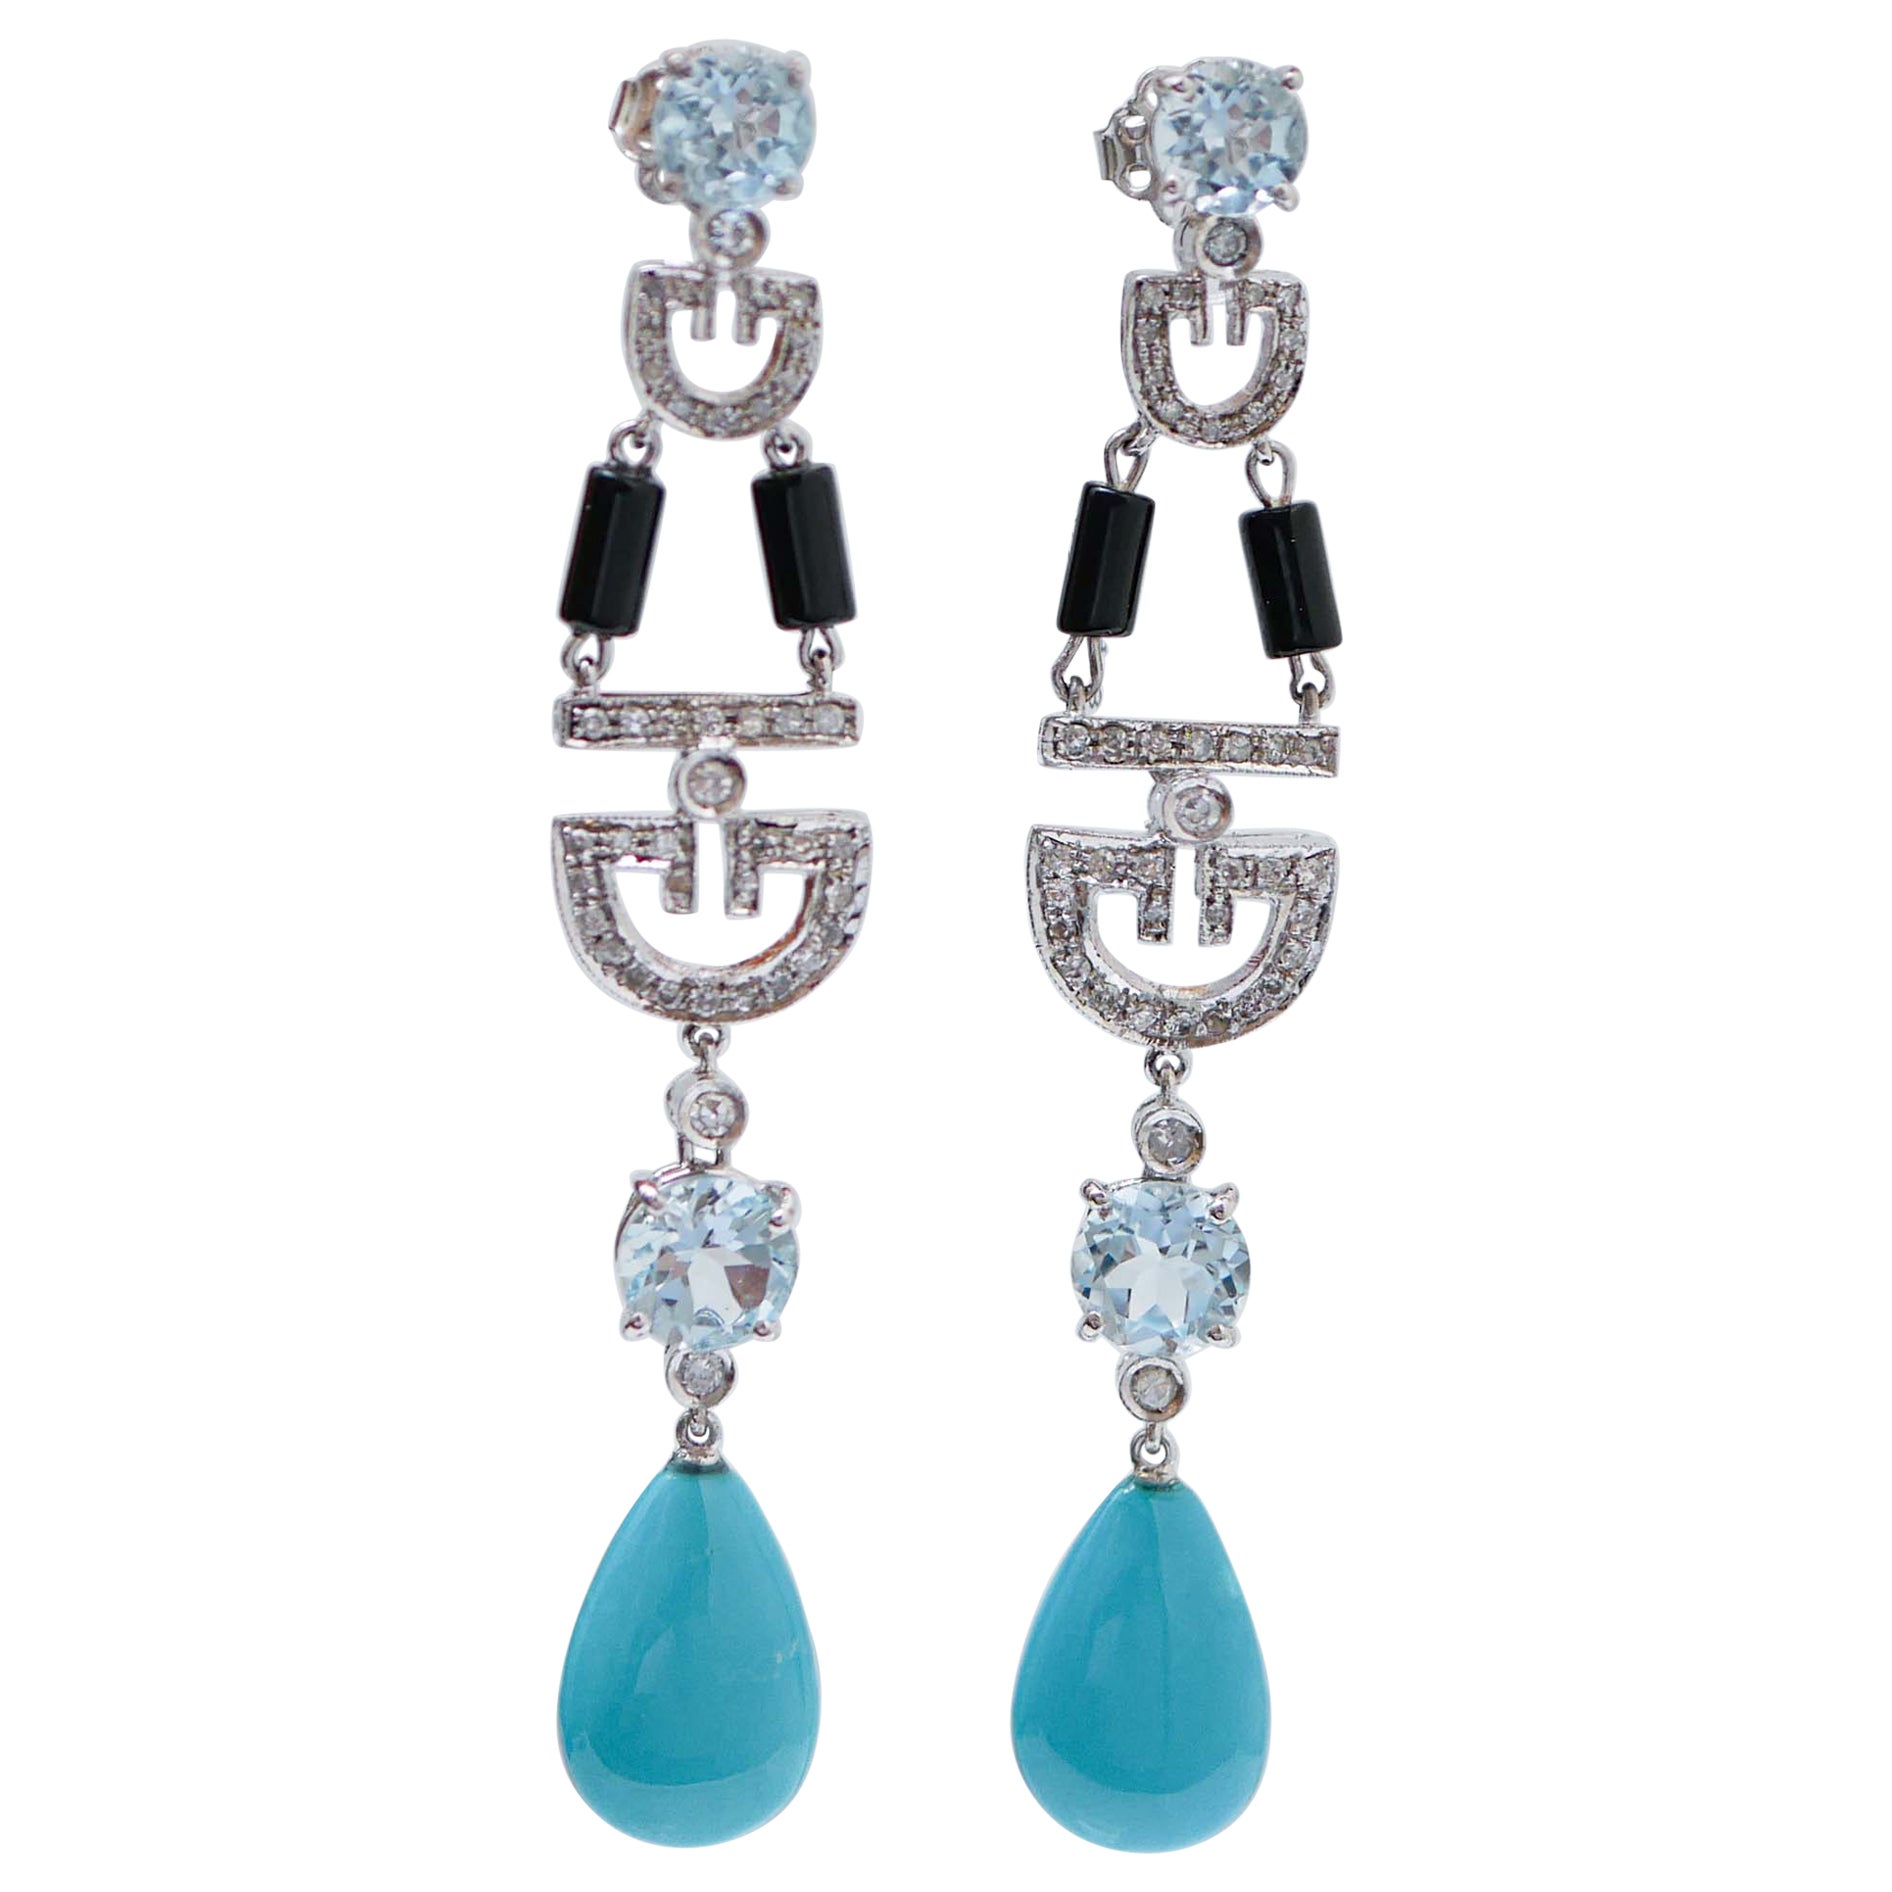 Turquoise, Onyx, Aquamarine Colour Topazs, Diamonds, Platinum Earrings. For Sale